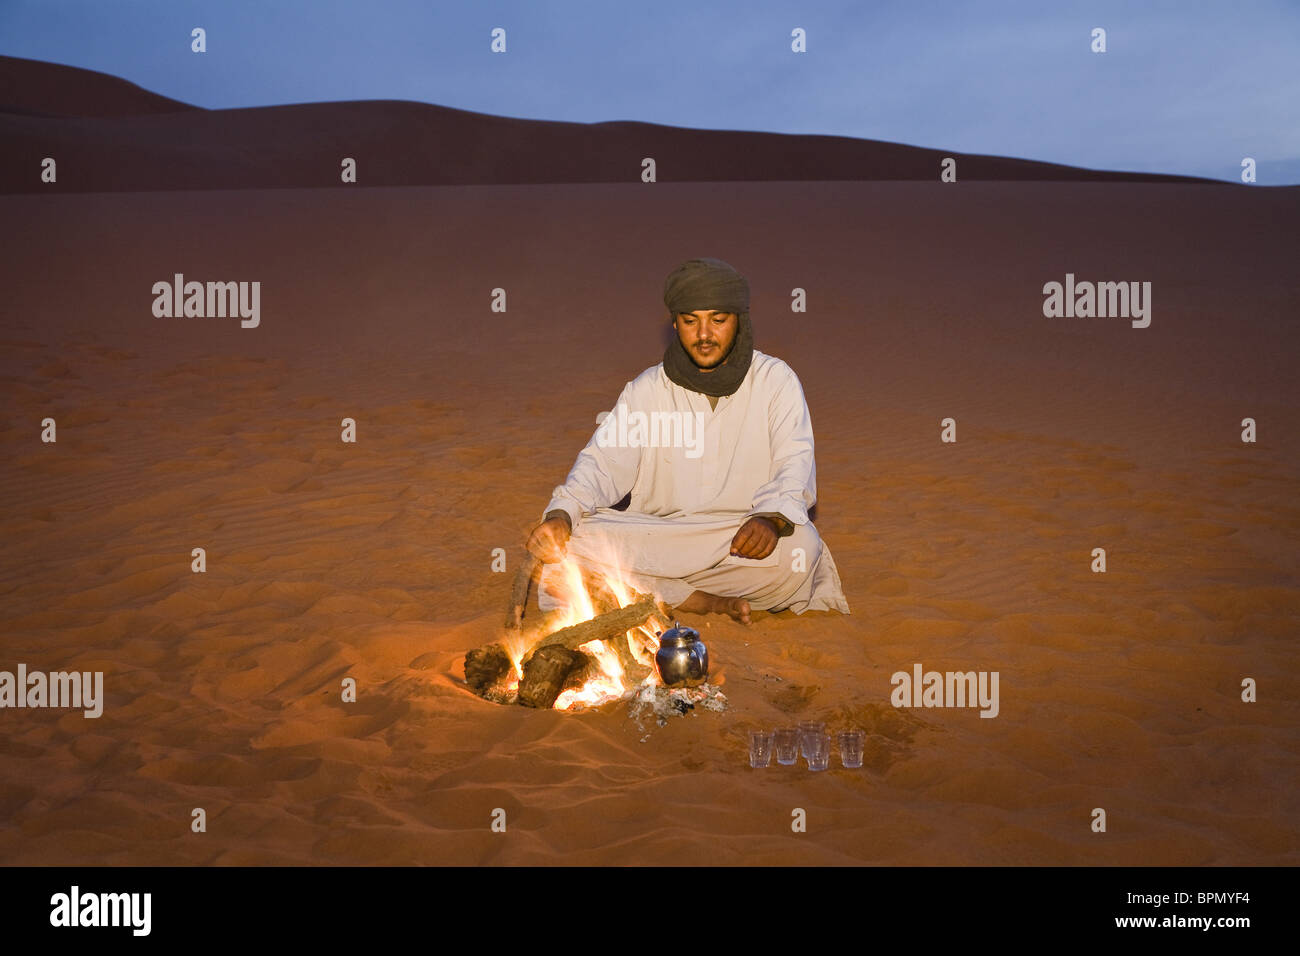 tuareg preparing tea at campfire, Libya, Africa Stock Photo